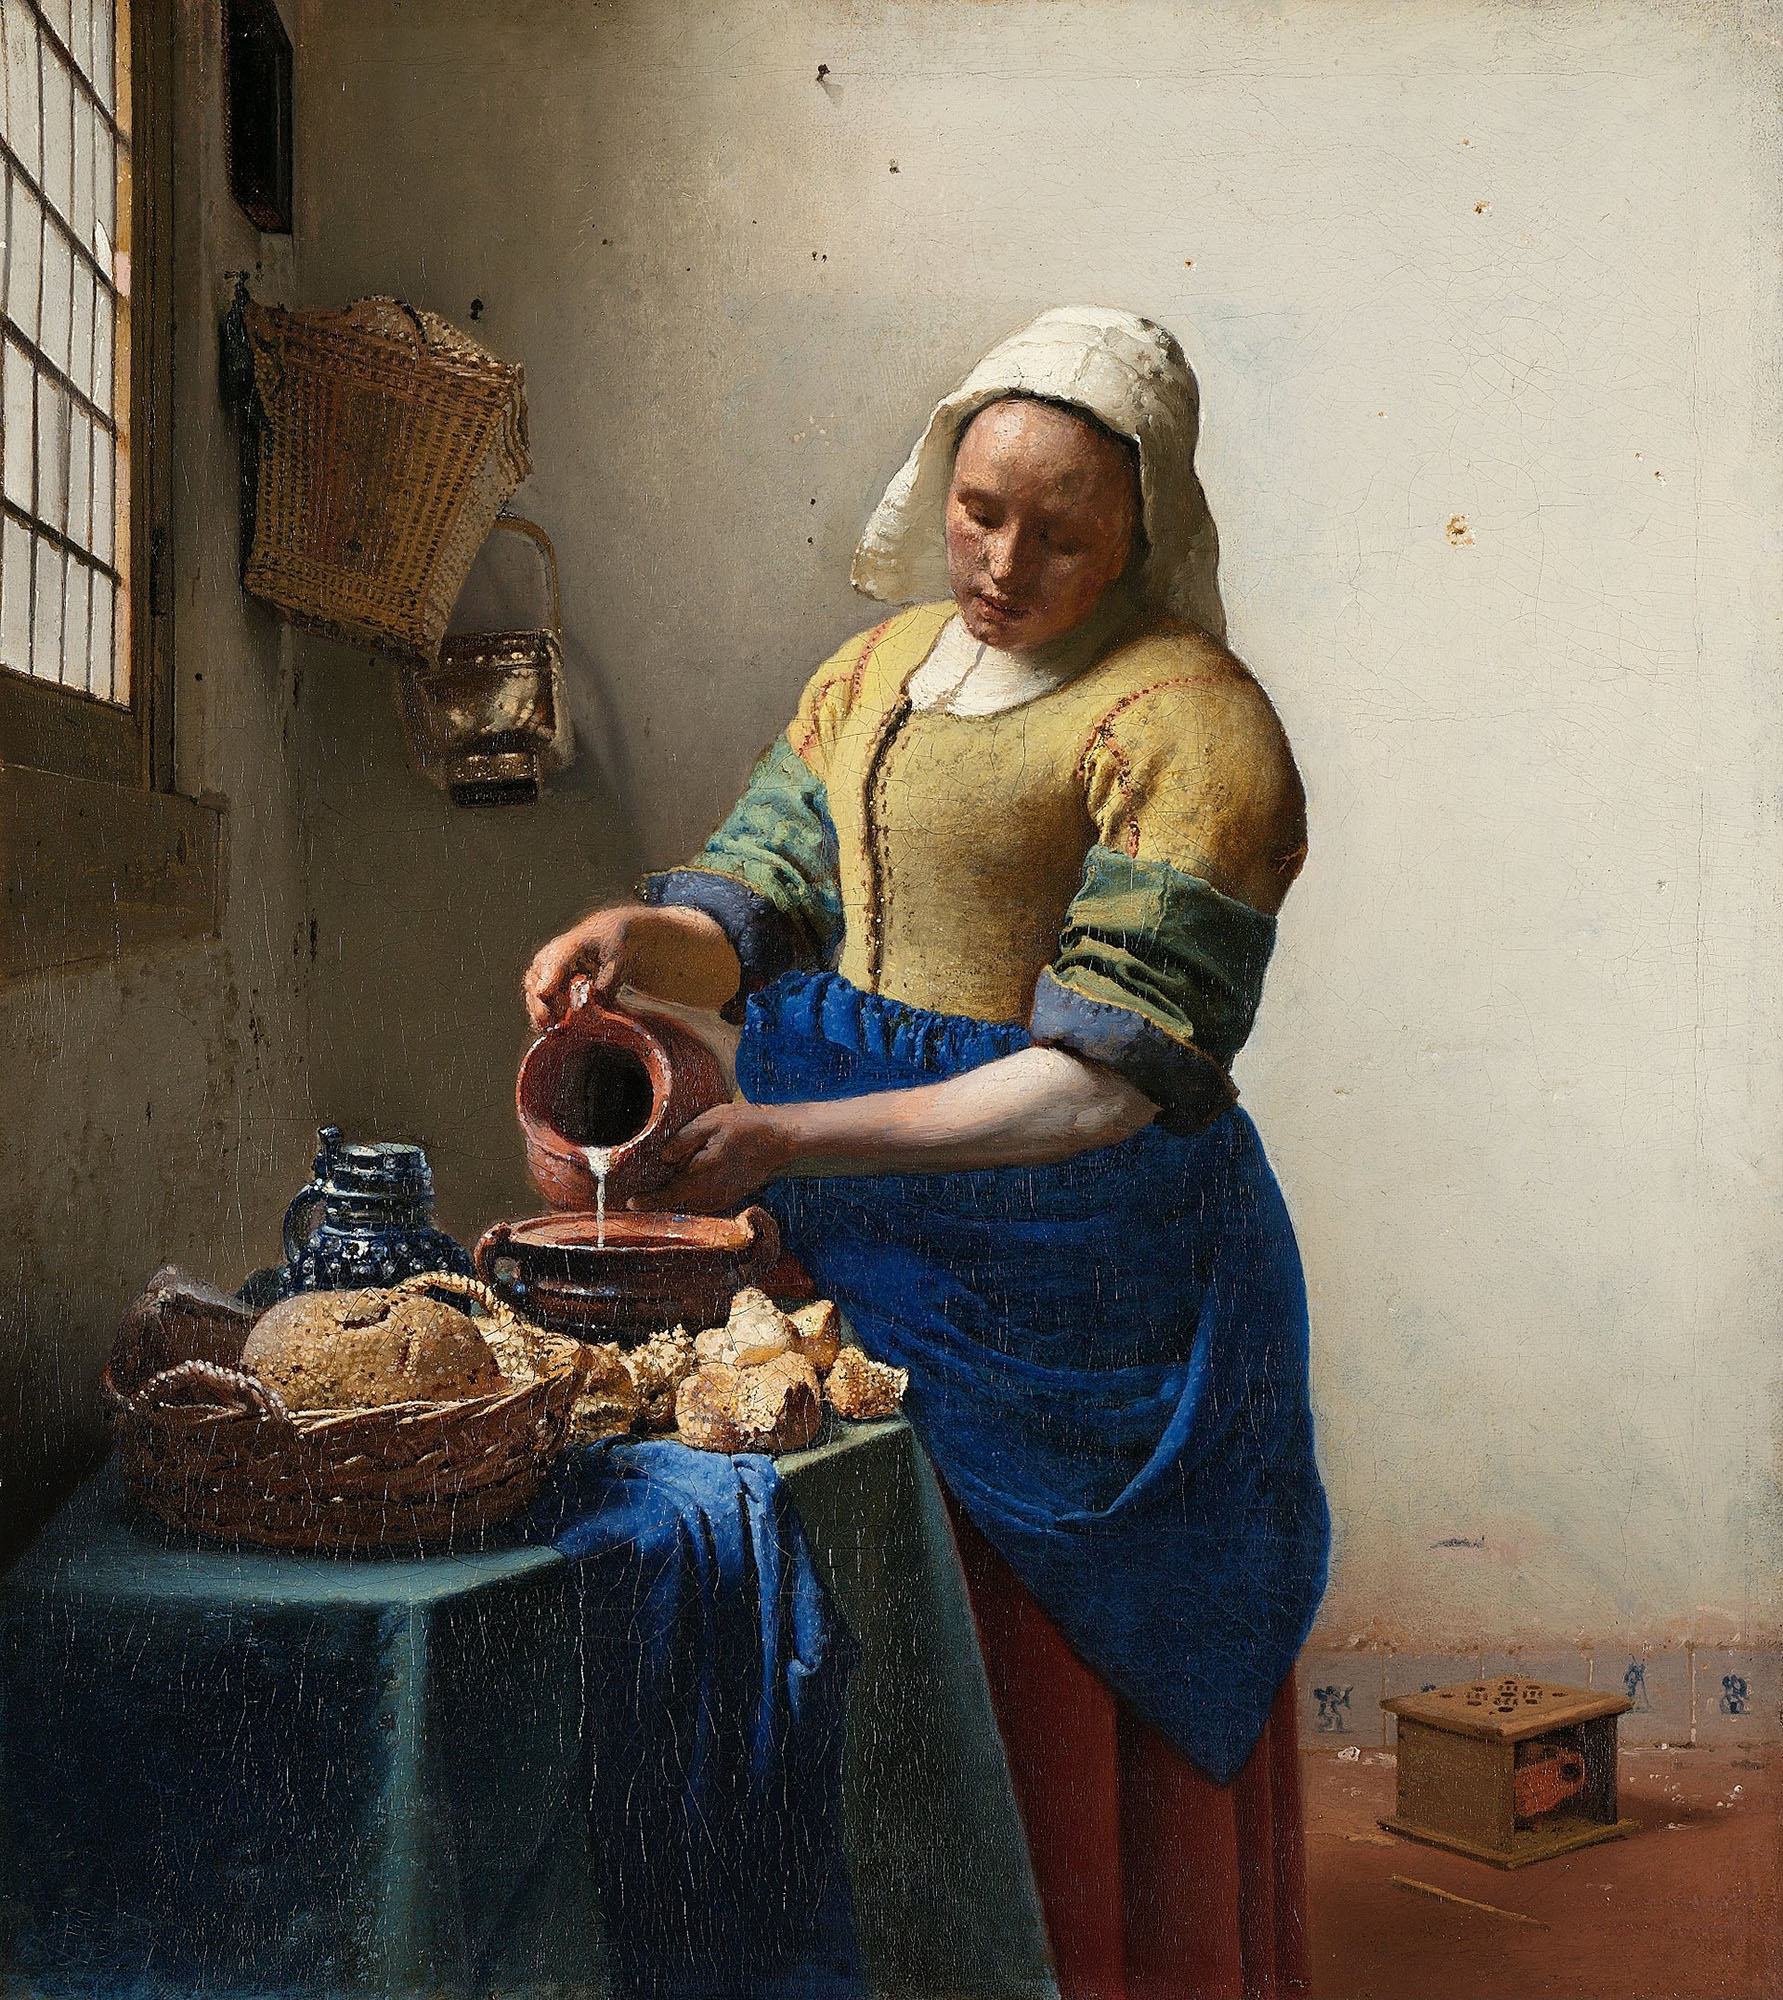 The original The Milkmaid by Johannes Vermeer